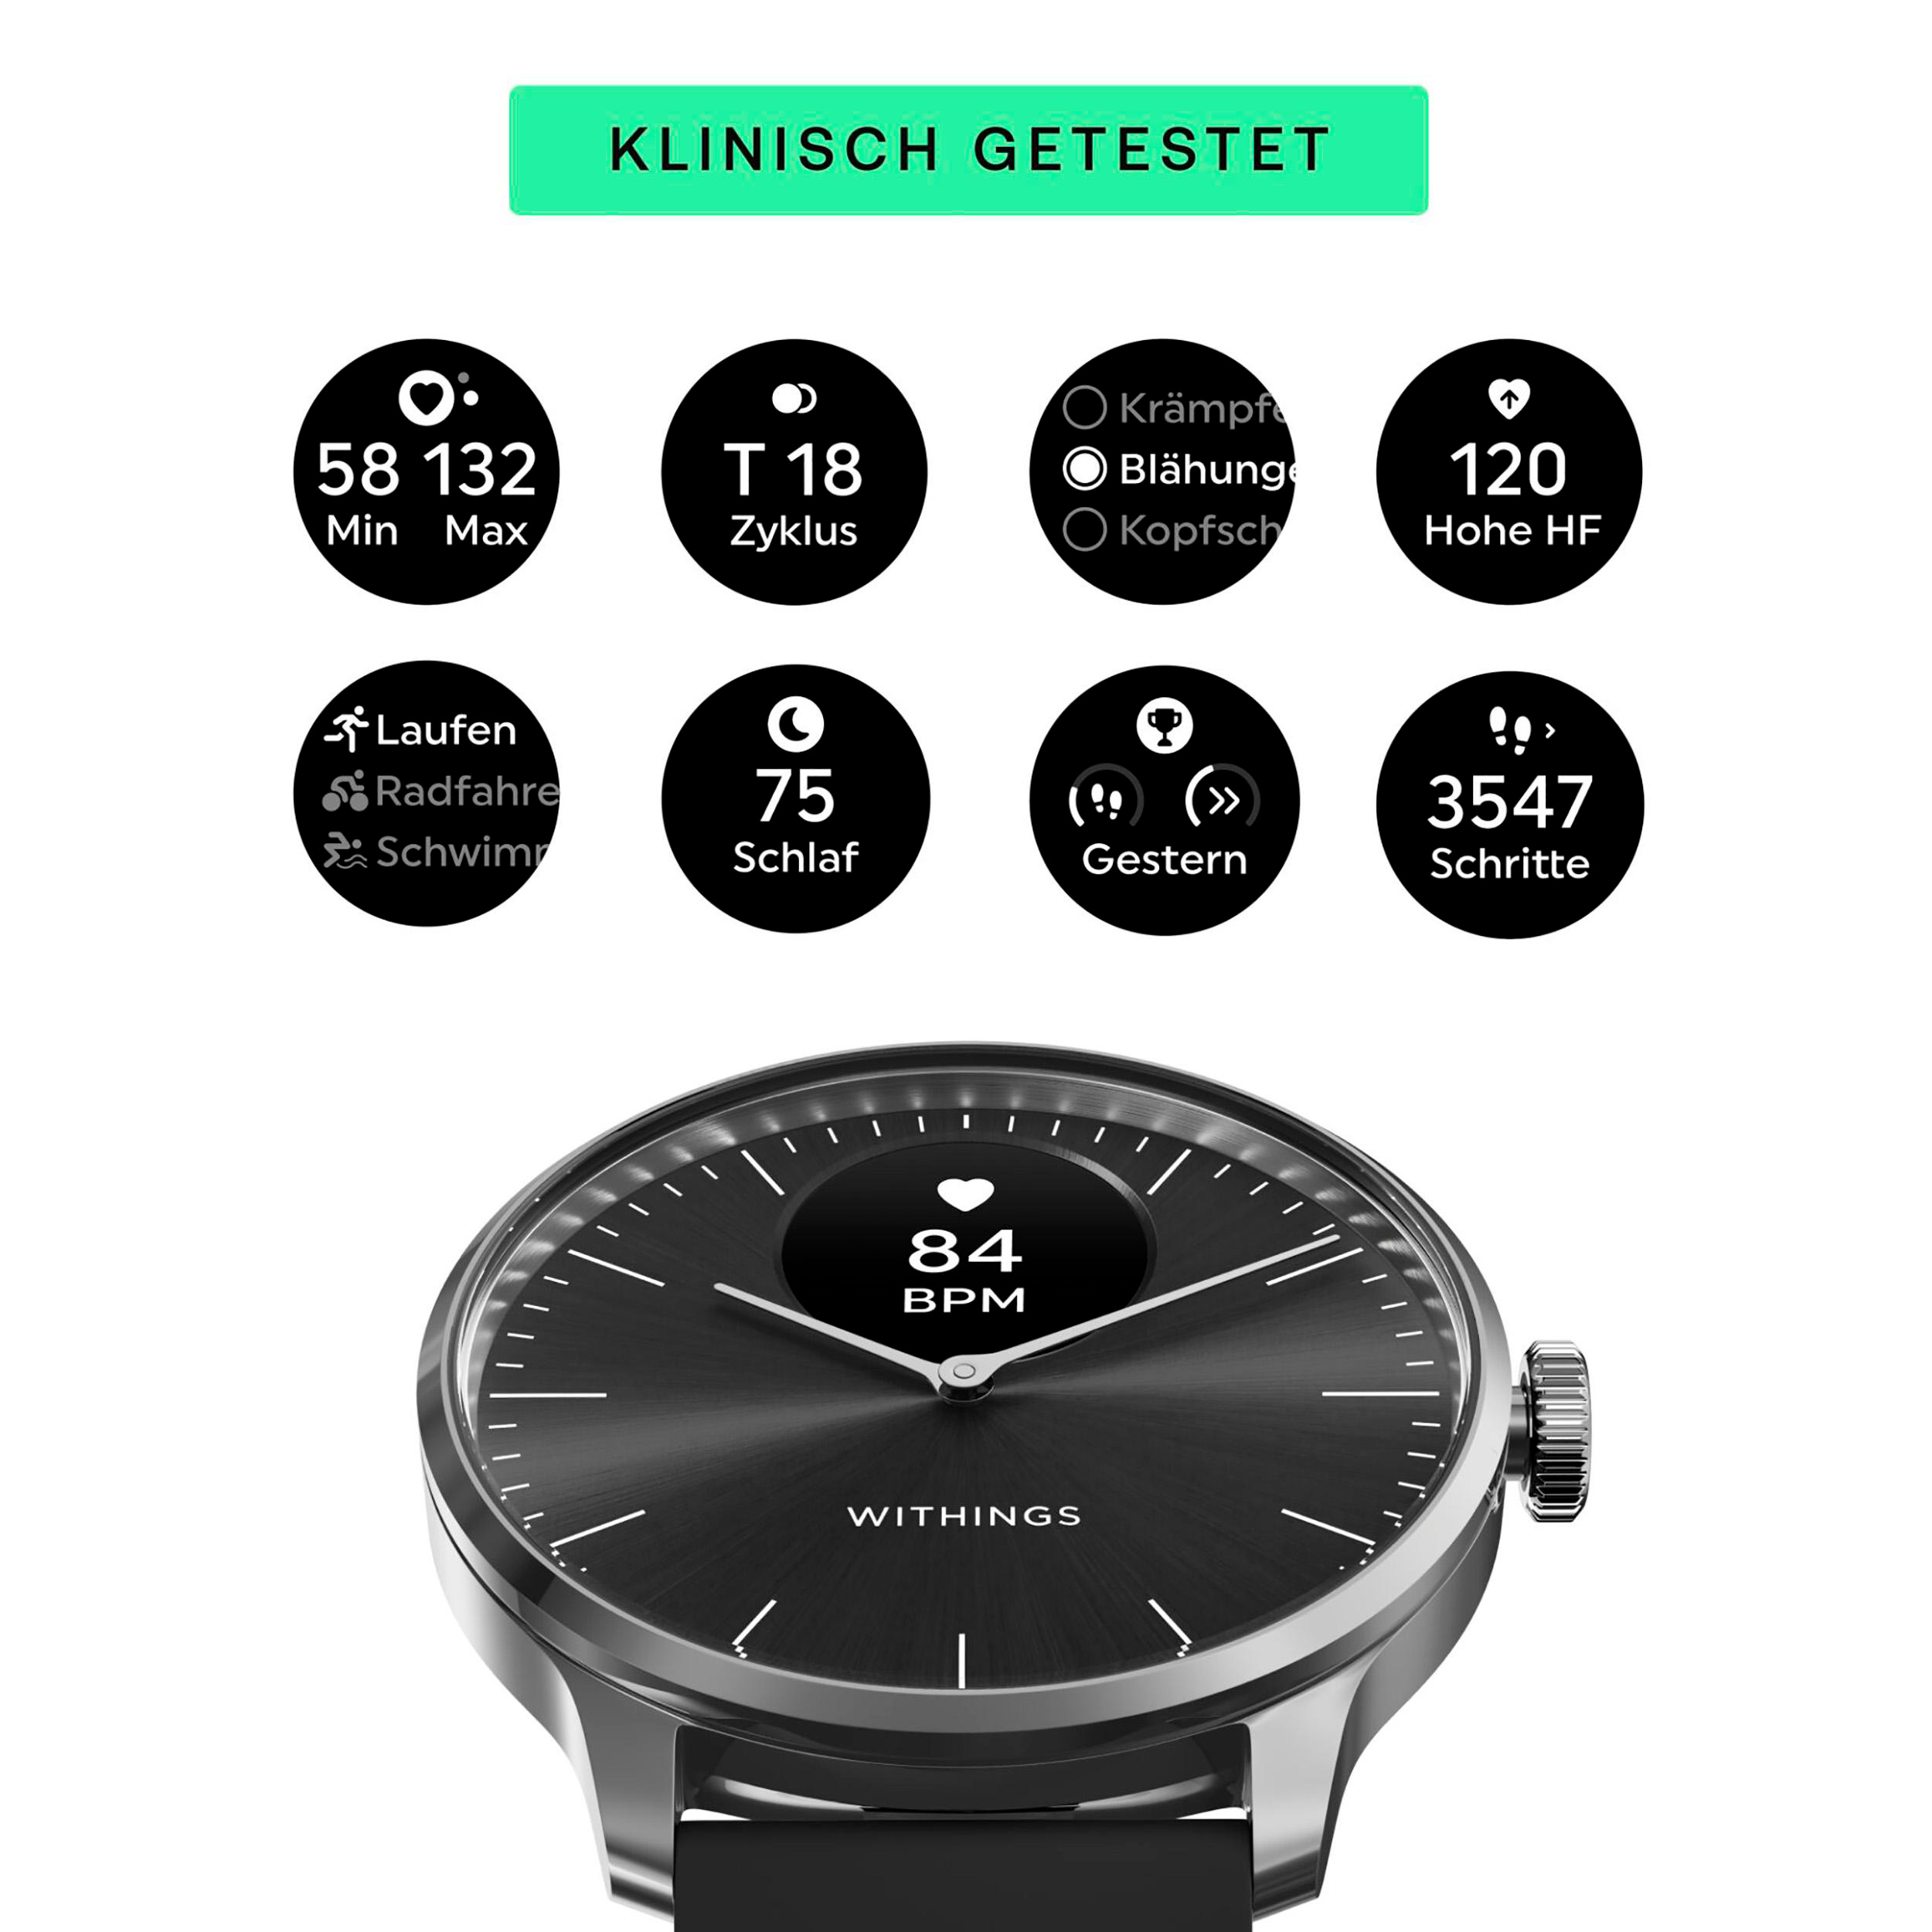 37 Edelstahl Smartwatch Light Schwarz WITHINGS Edelstahl, mm, Kautschuk, ScanWatch Armbandmaterial: